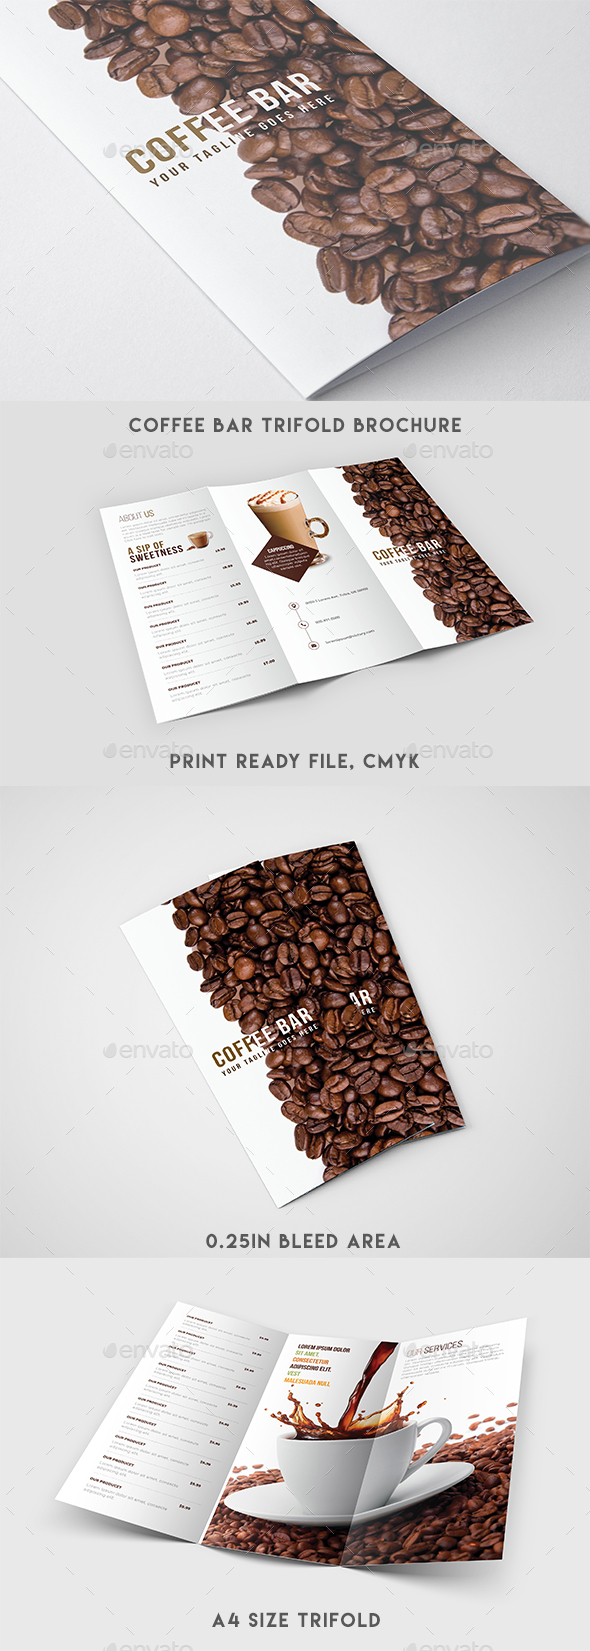 Trifold Brochure - Coffee Menu